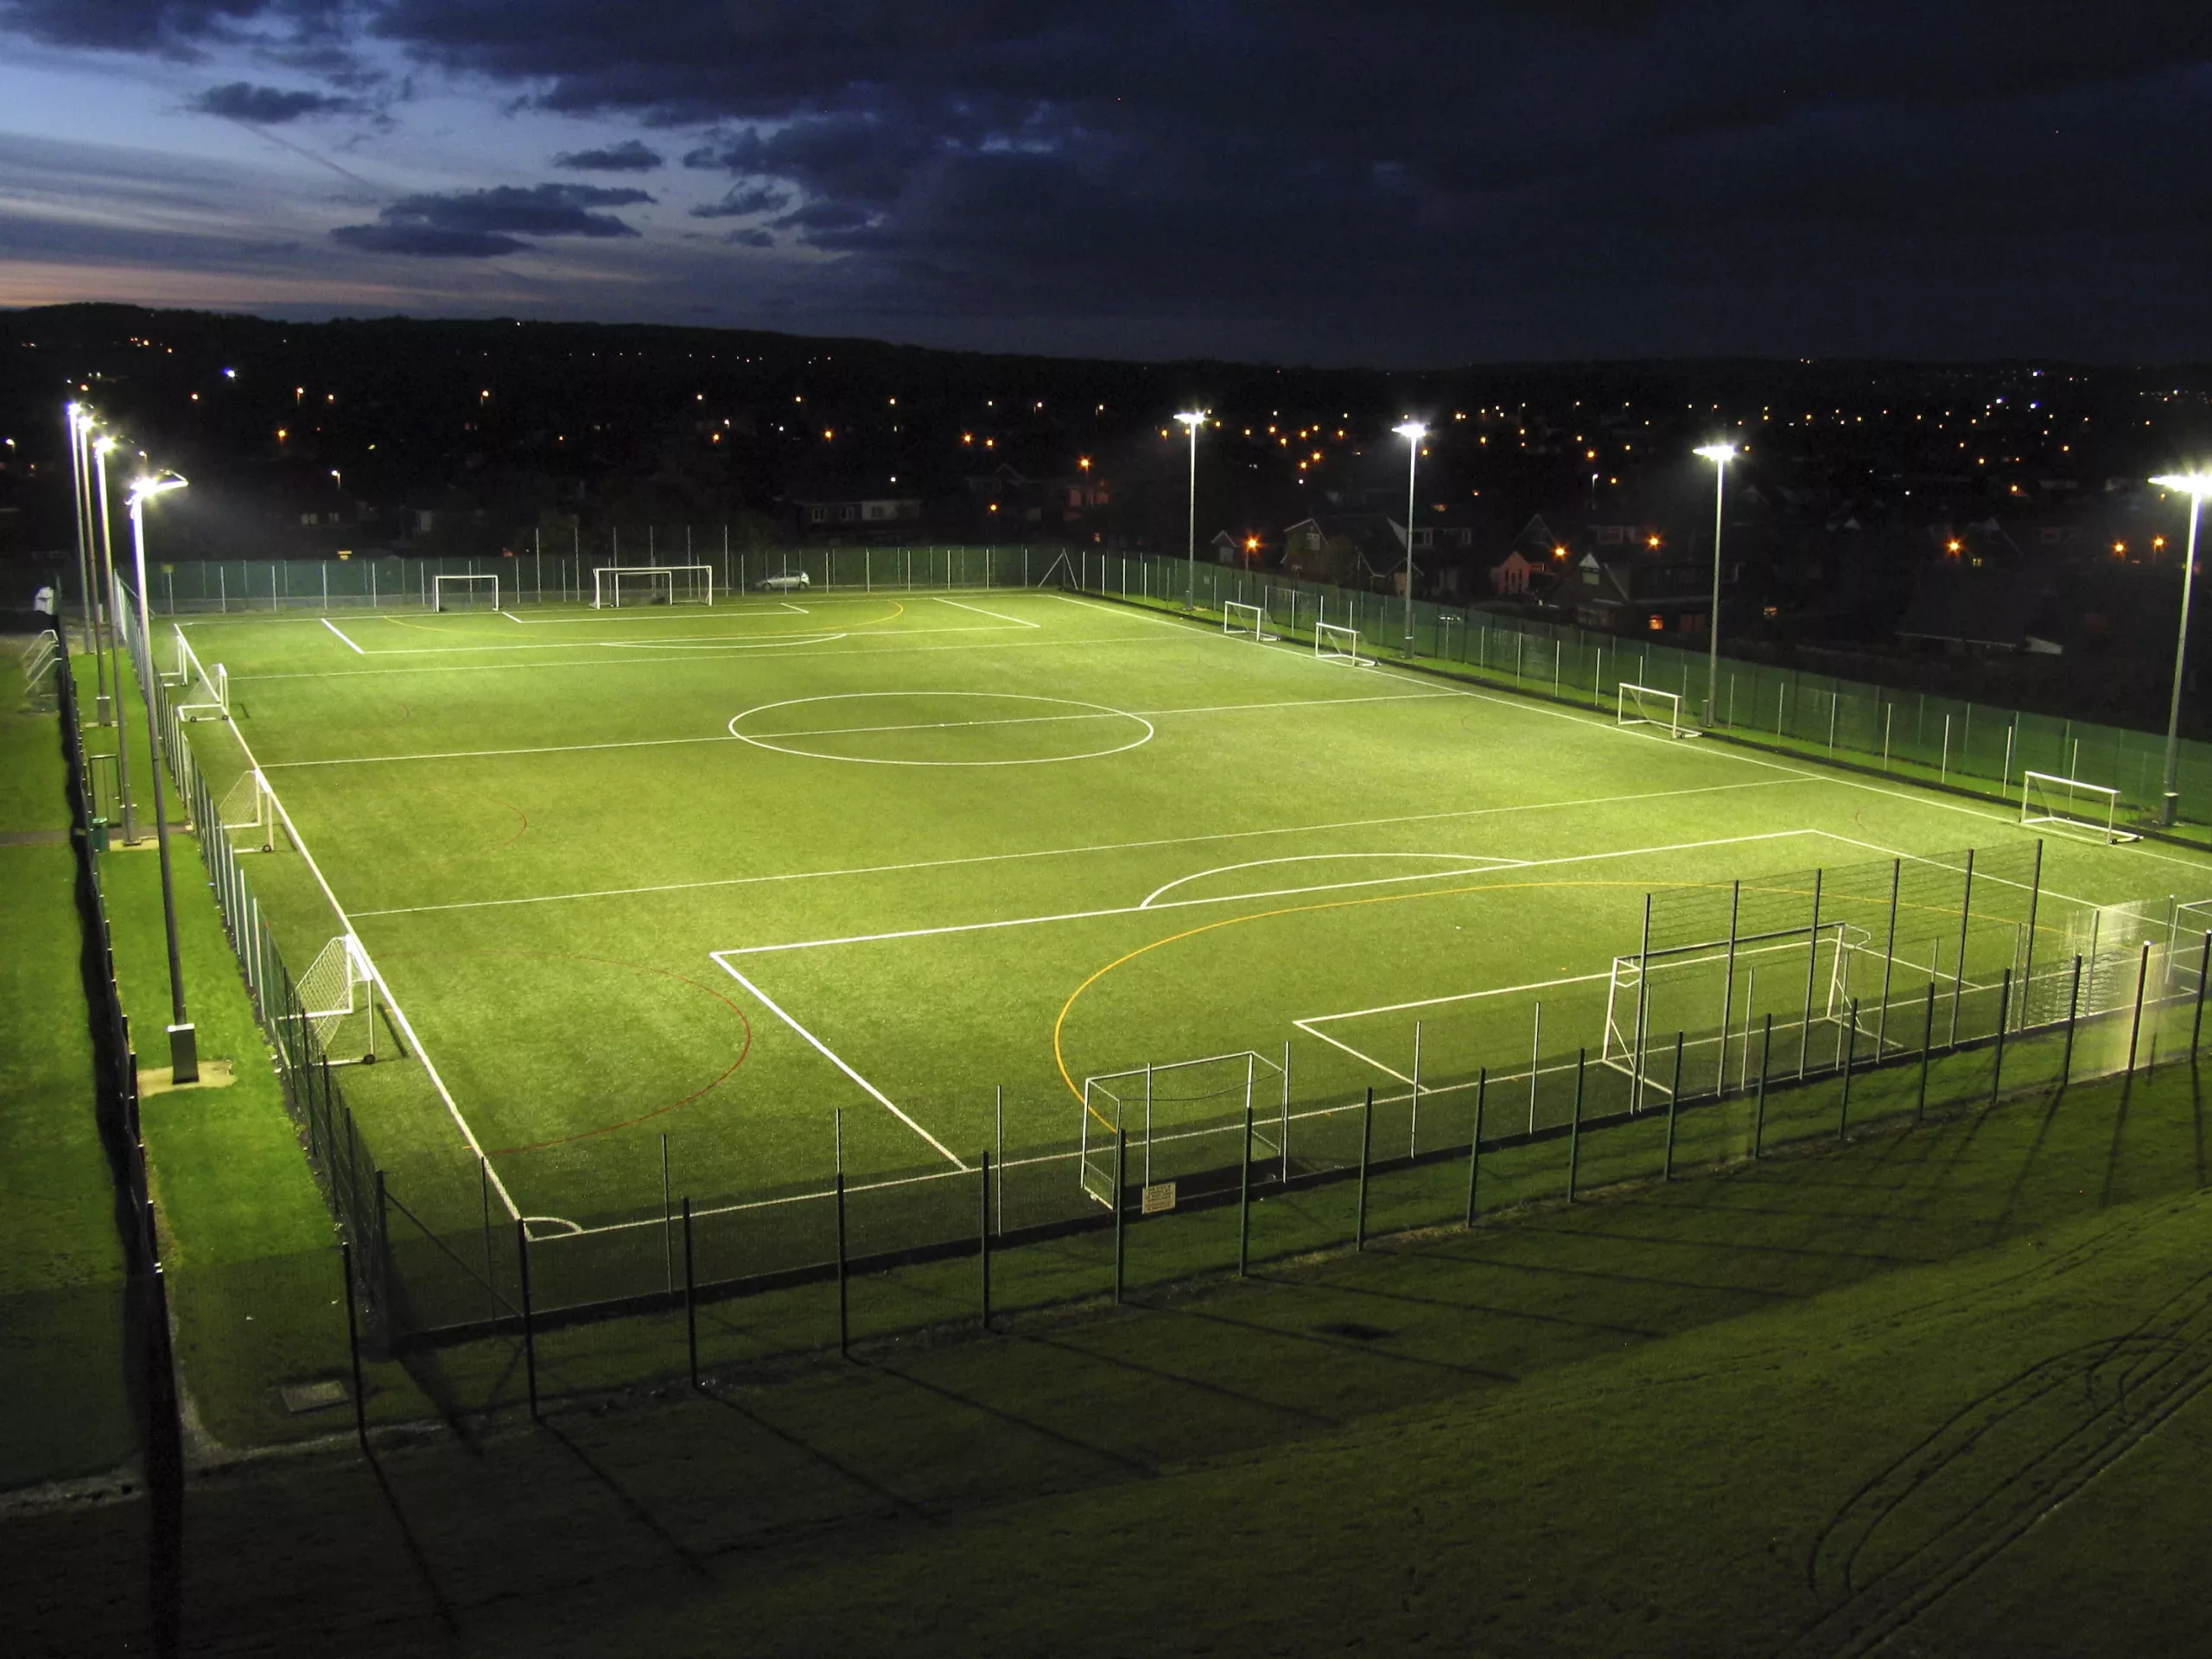 Stadium Lighting With Green Field at Night